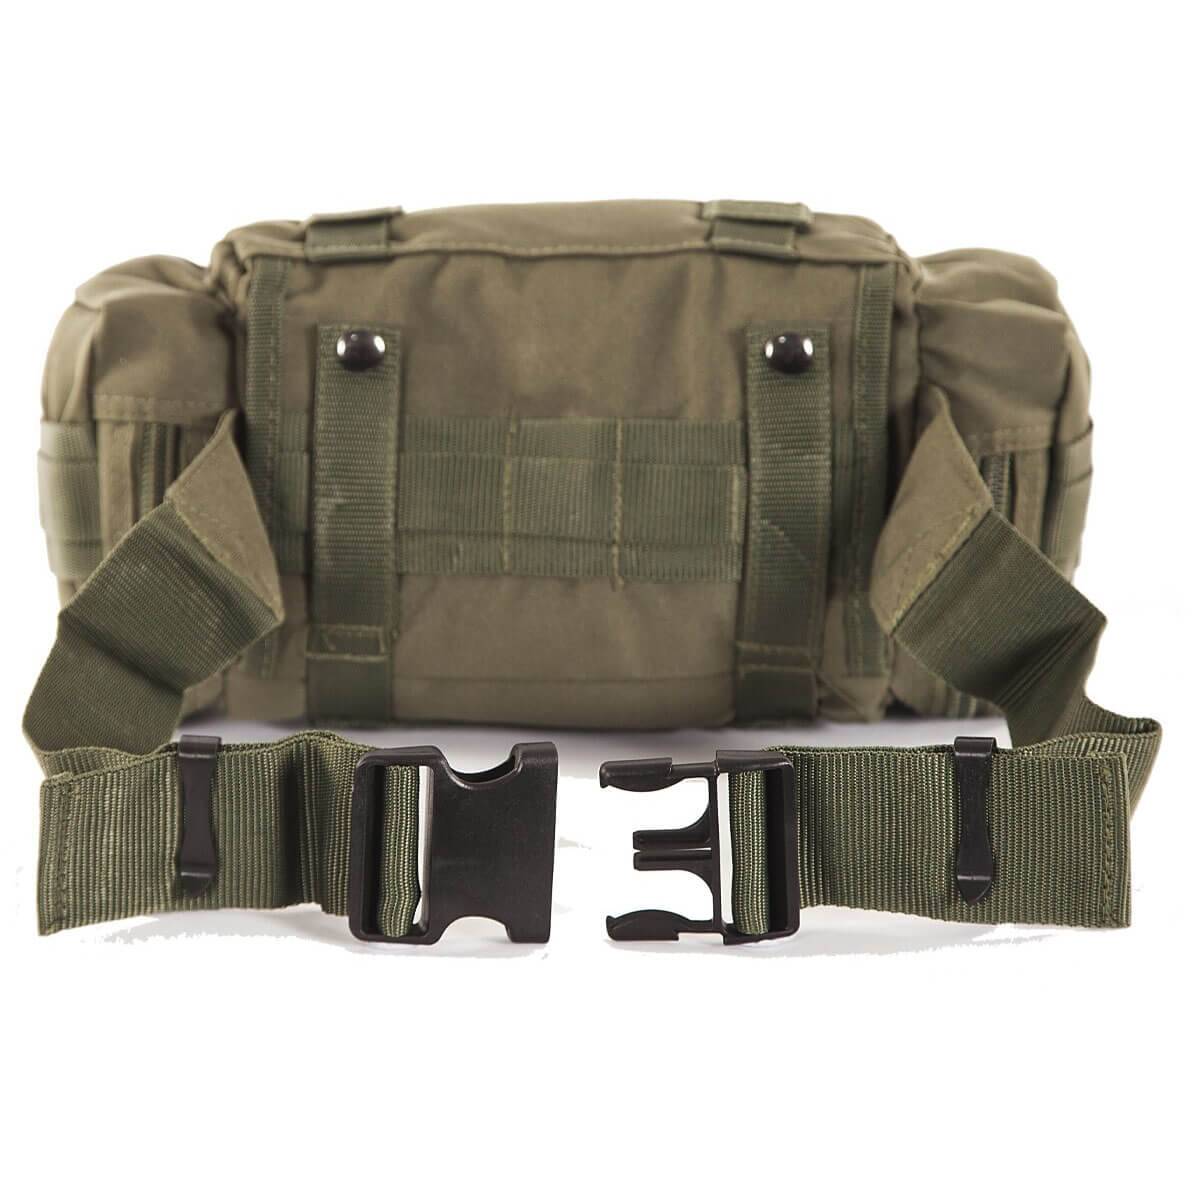 Snugpak ResponsePak Tactical Deployment Bag - John Bull Clothing